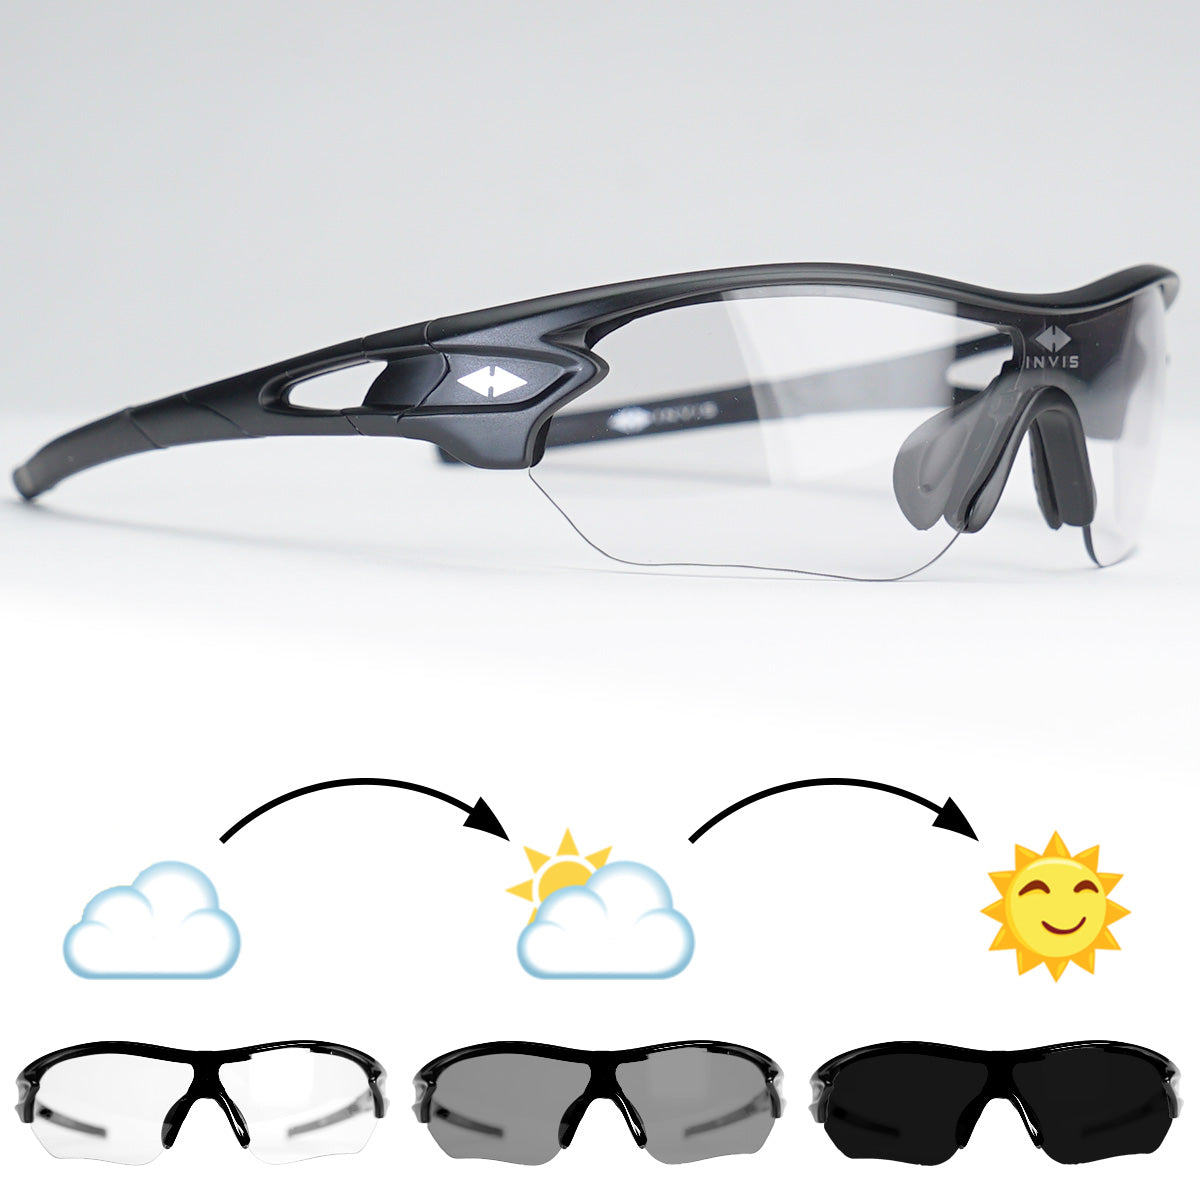 Photochromic Sunglasses by Invis | Ultra Fast Transition Sunglasses Techno-Ice